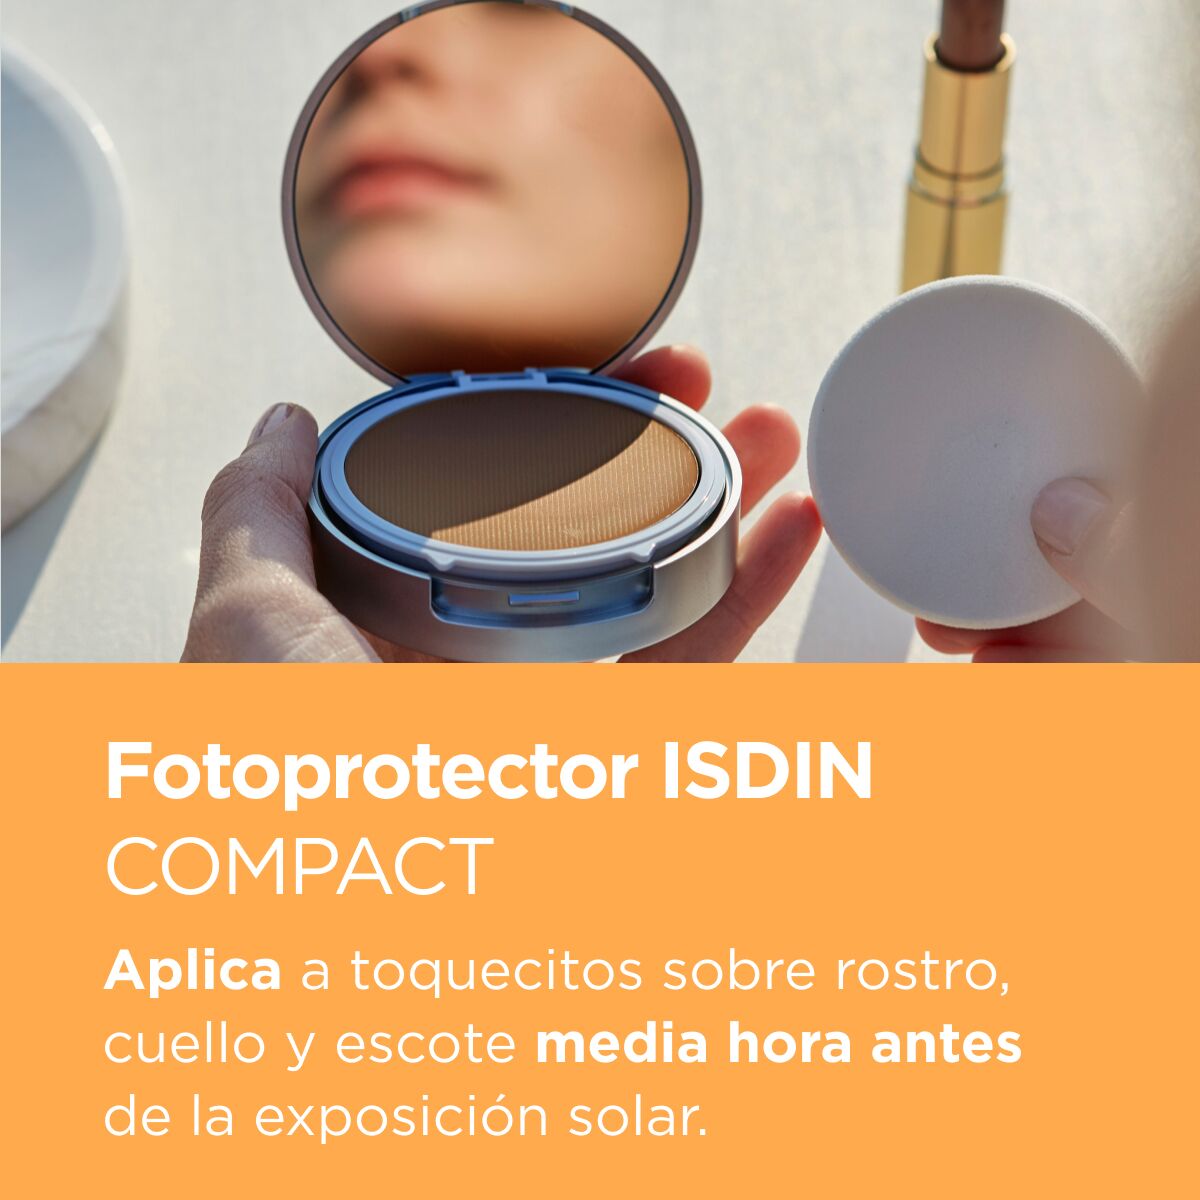 Fotoprotector ISDIN